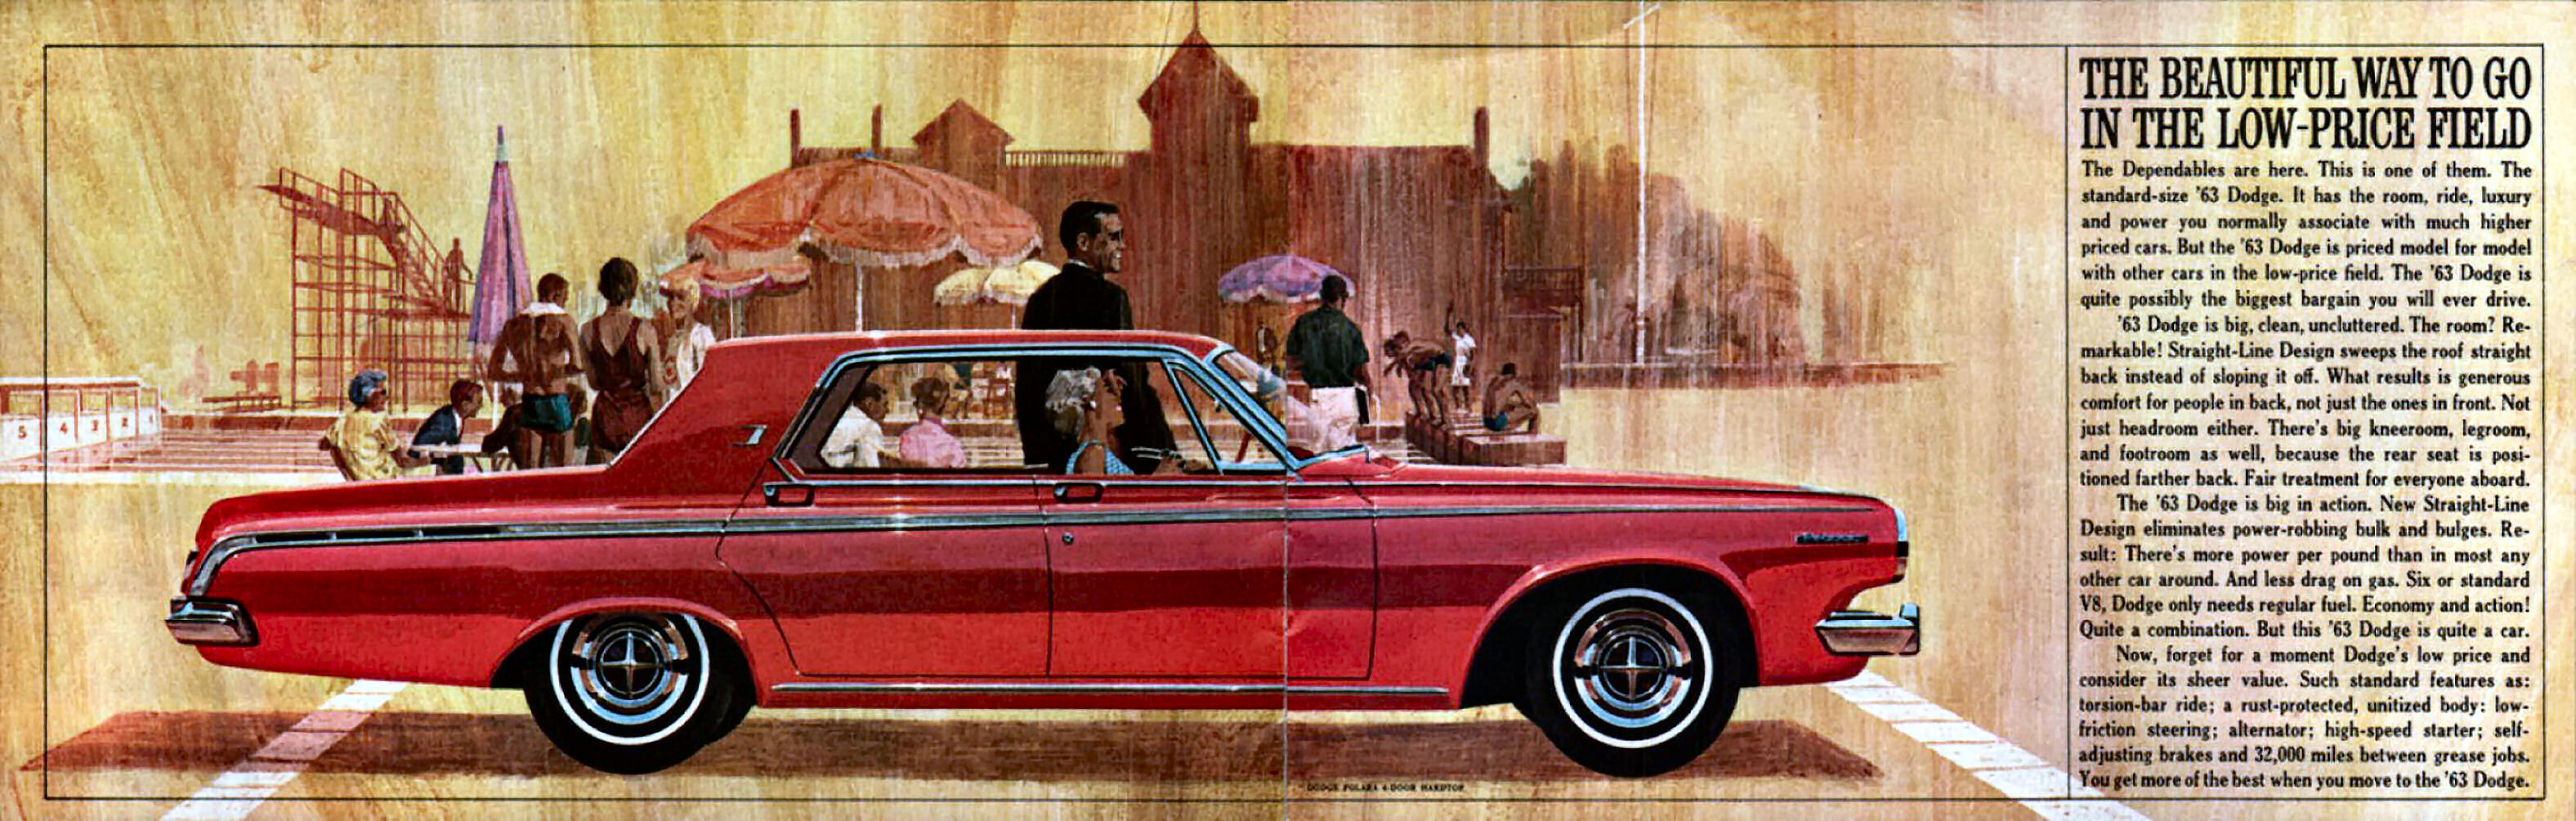 1963_Dodge_Standard_Size_Sm-02-03